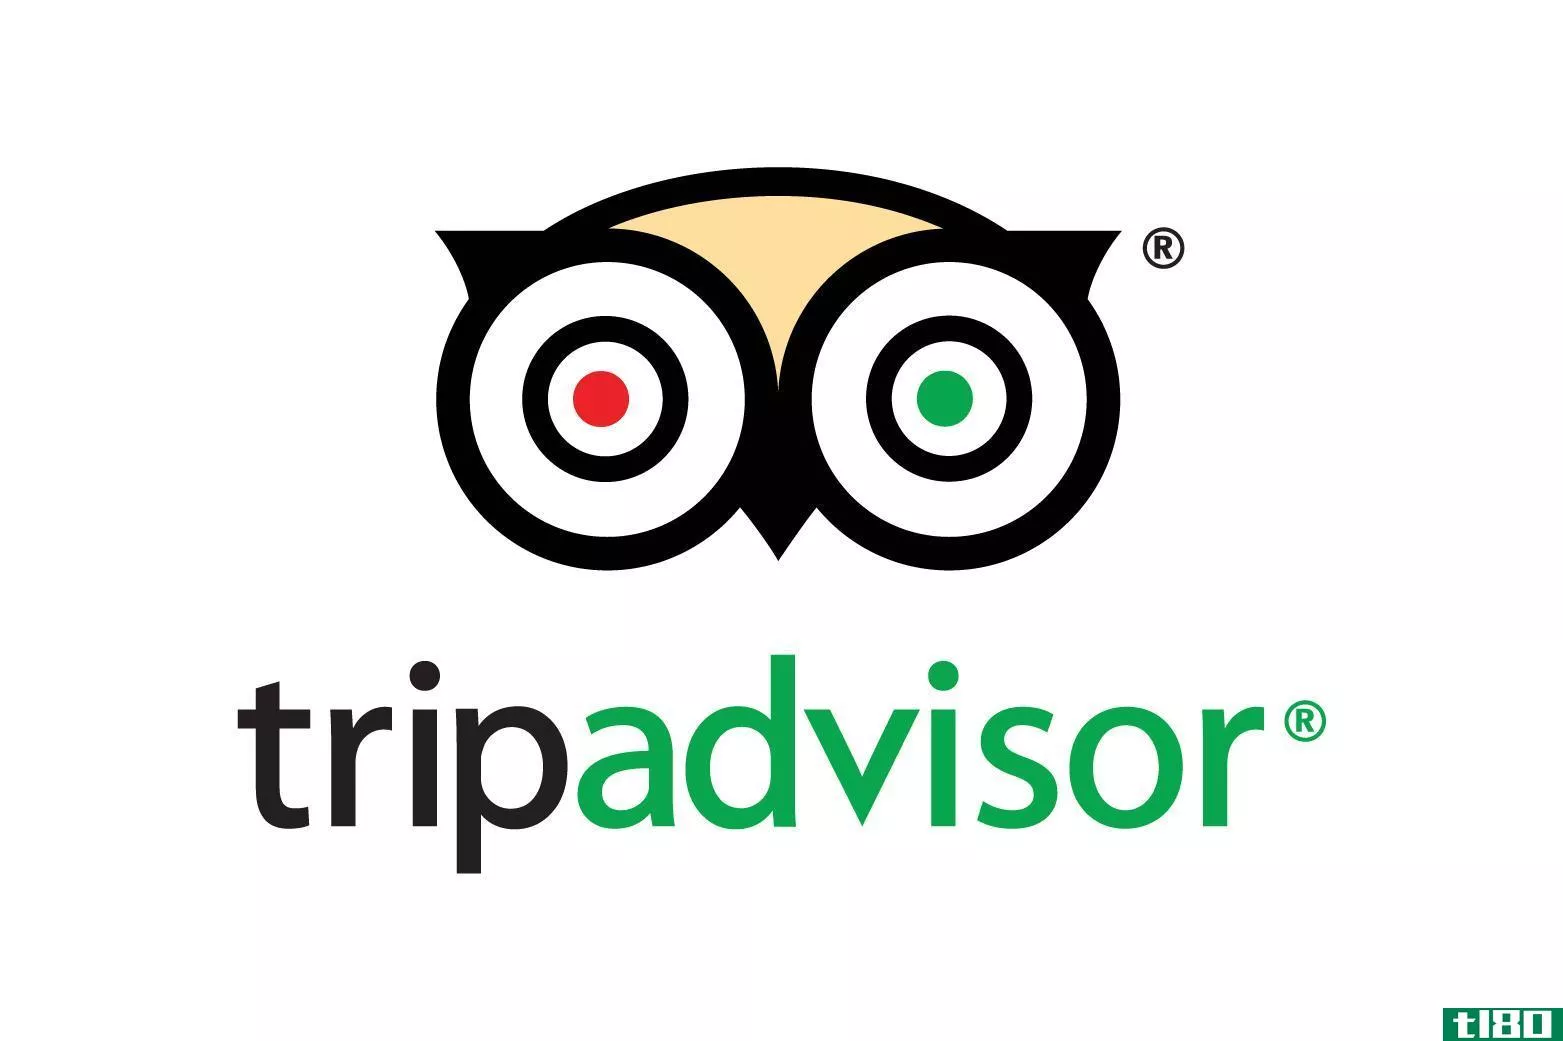 tripadvisor现在有了一个数字徽章来标记发生性侵犯的酒店